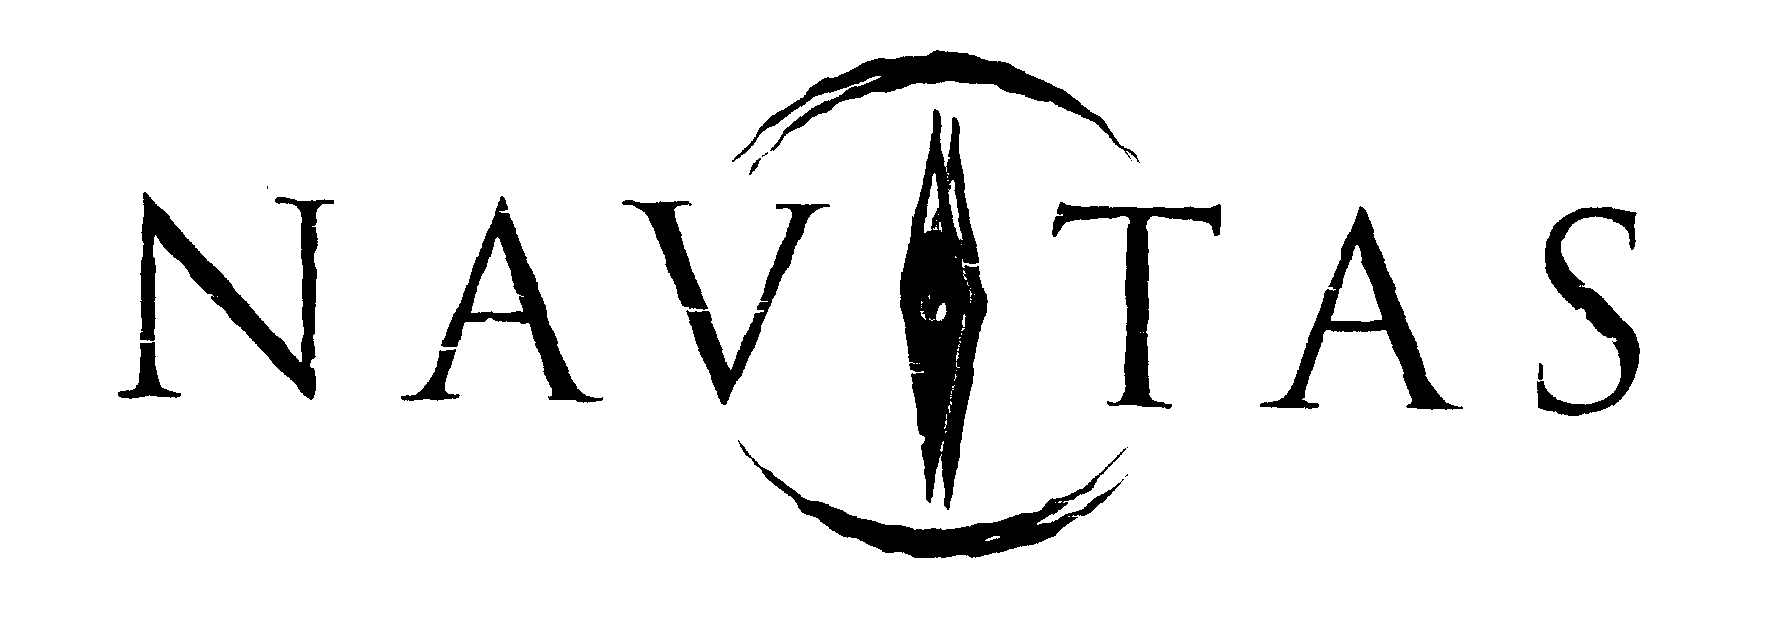 Trademark Logo NAVITAS